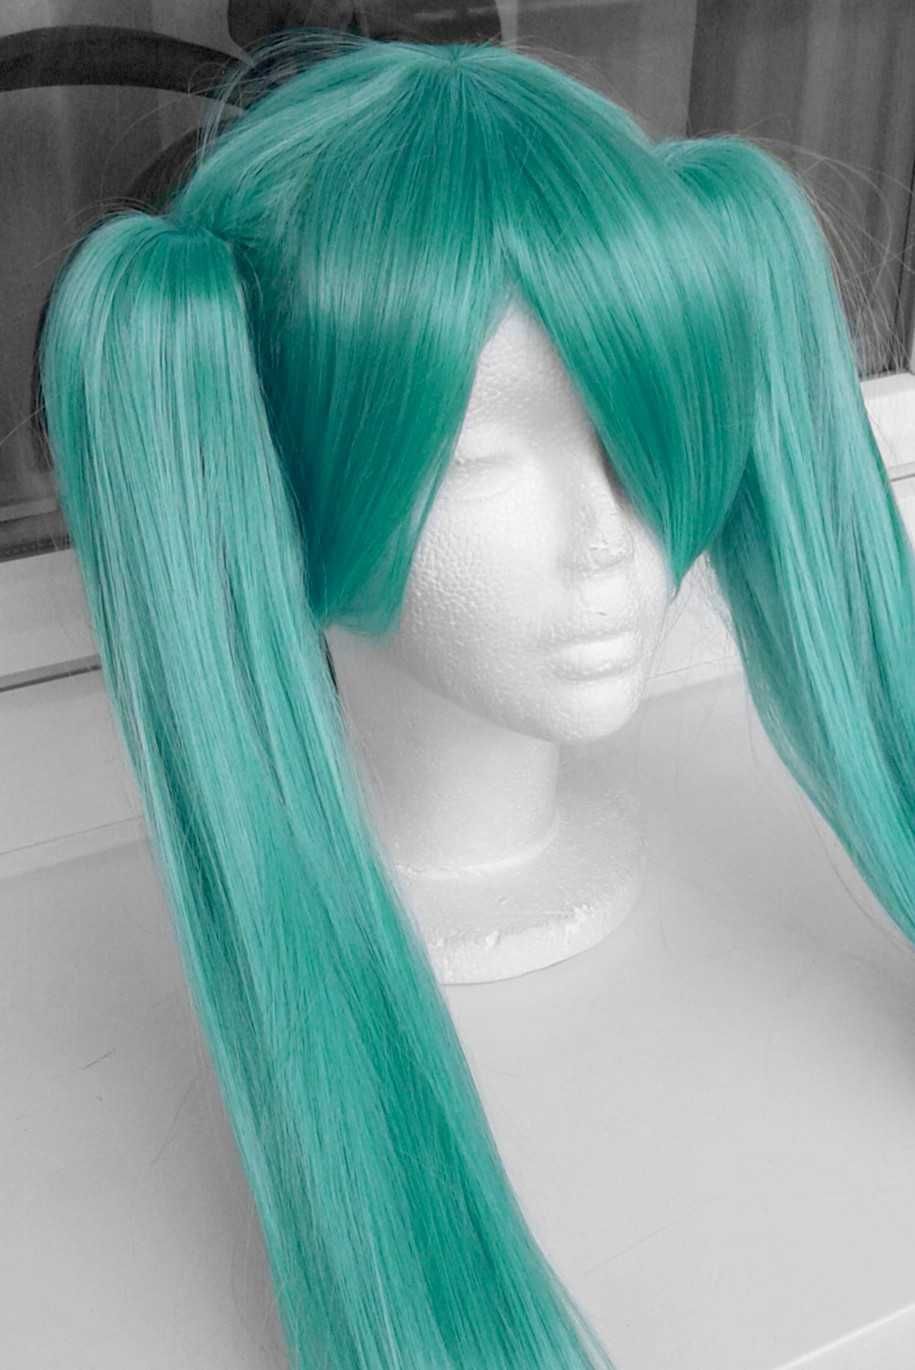 Miku Vocaloid turkusowa długa peruka z kitkami cosplay wig